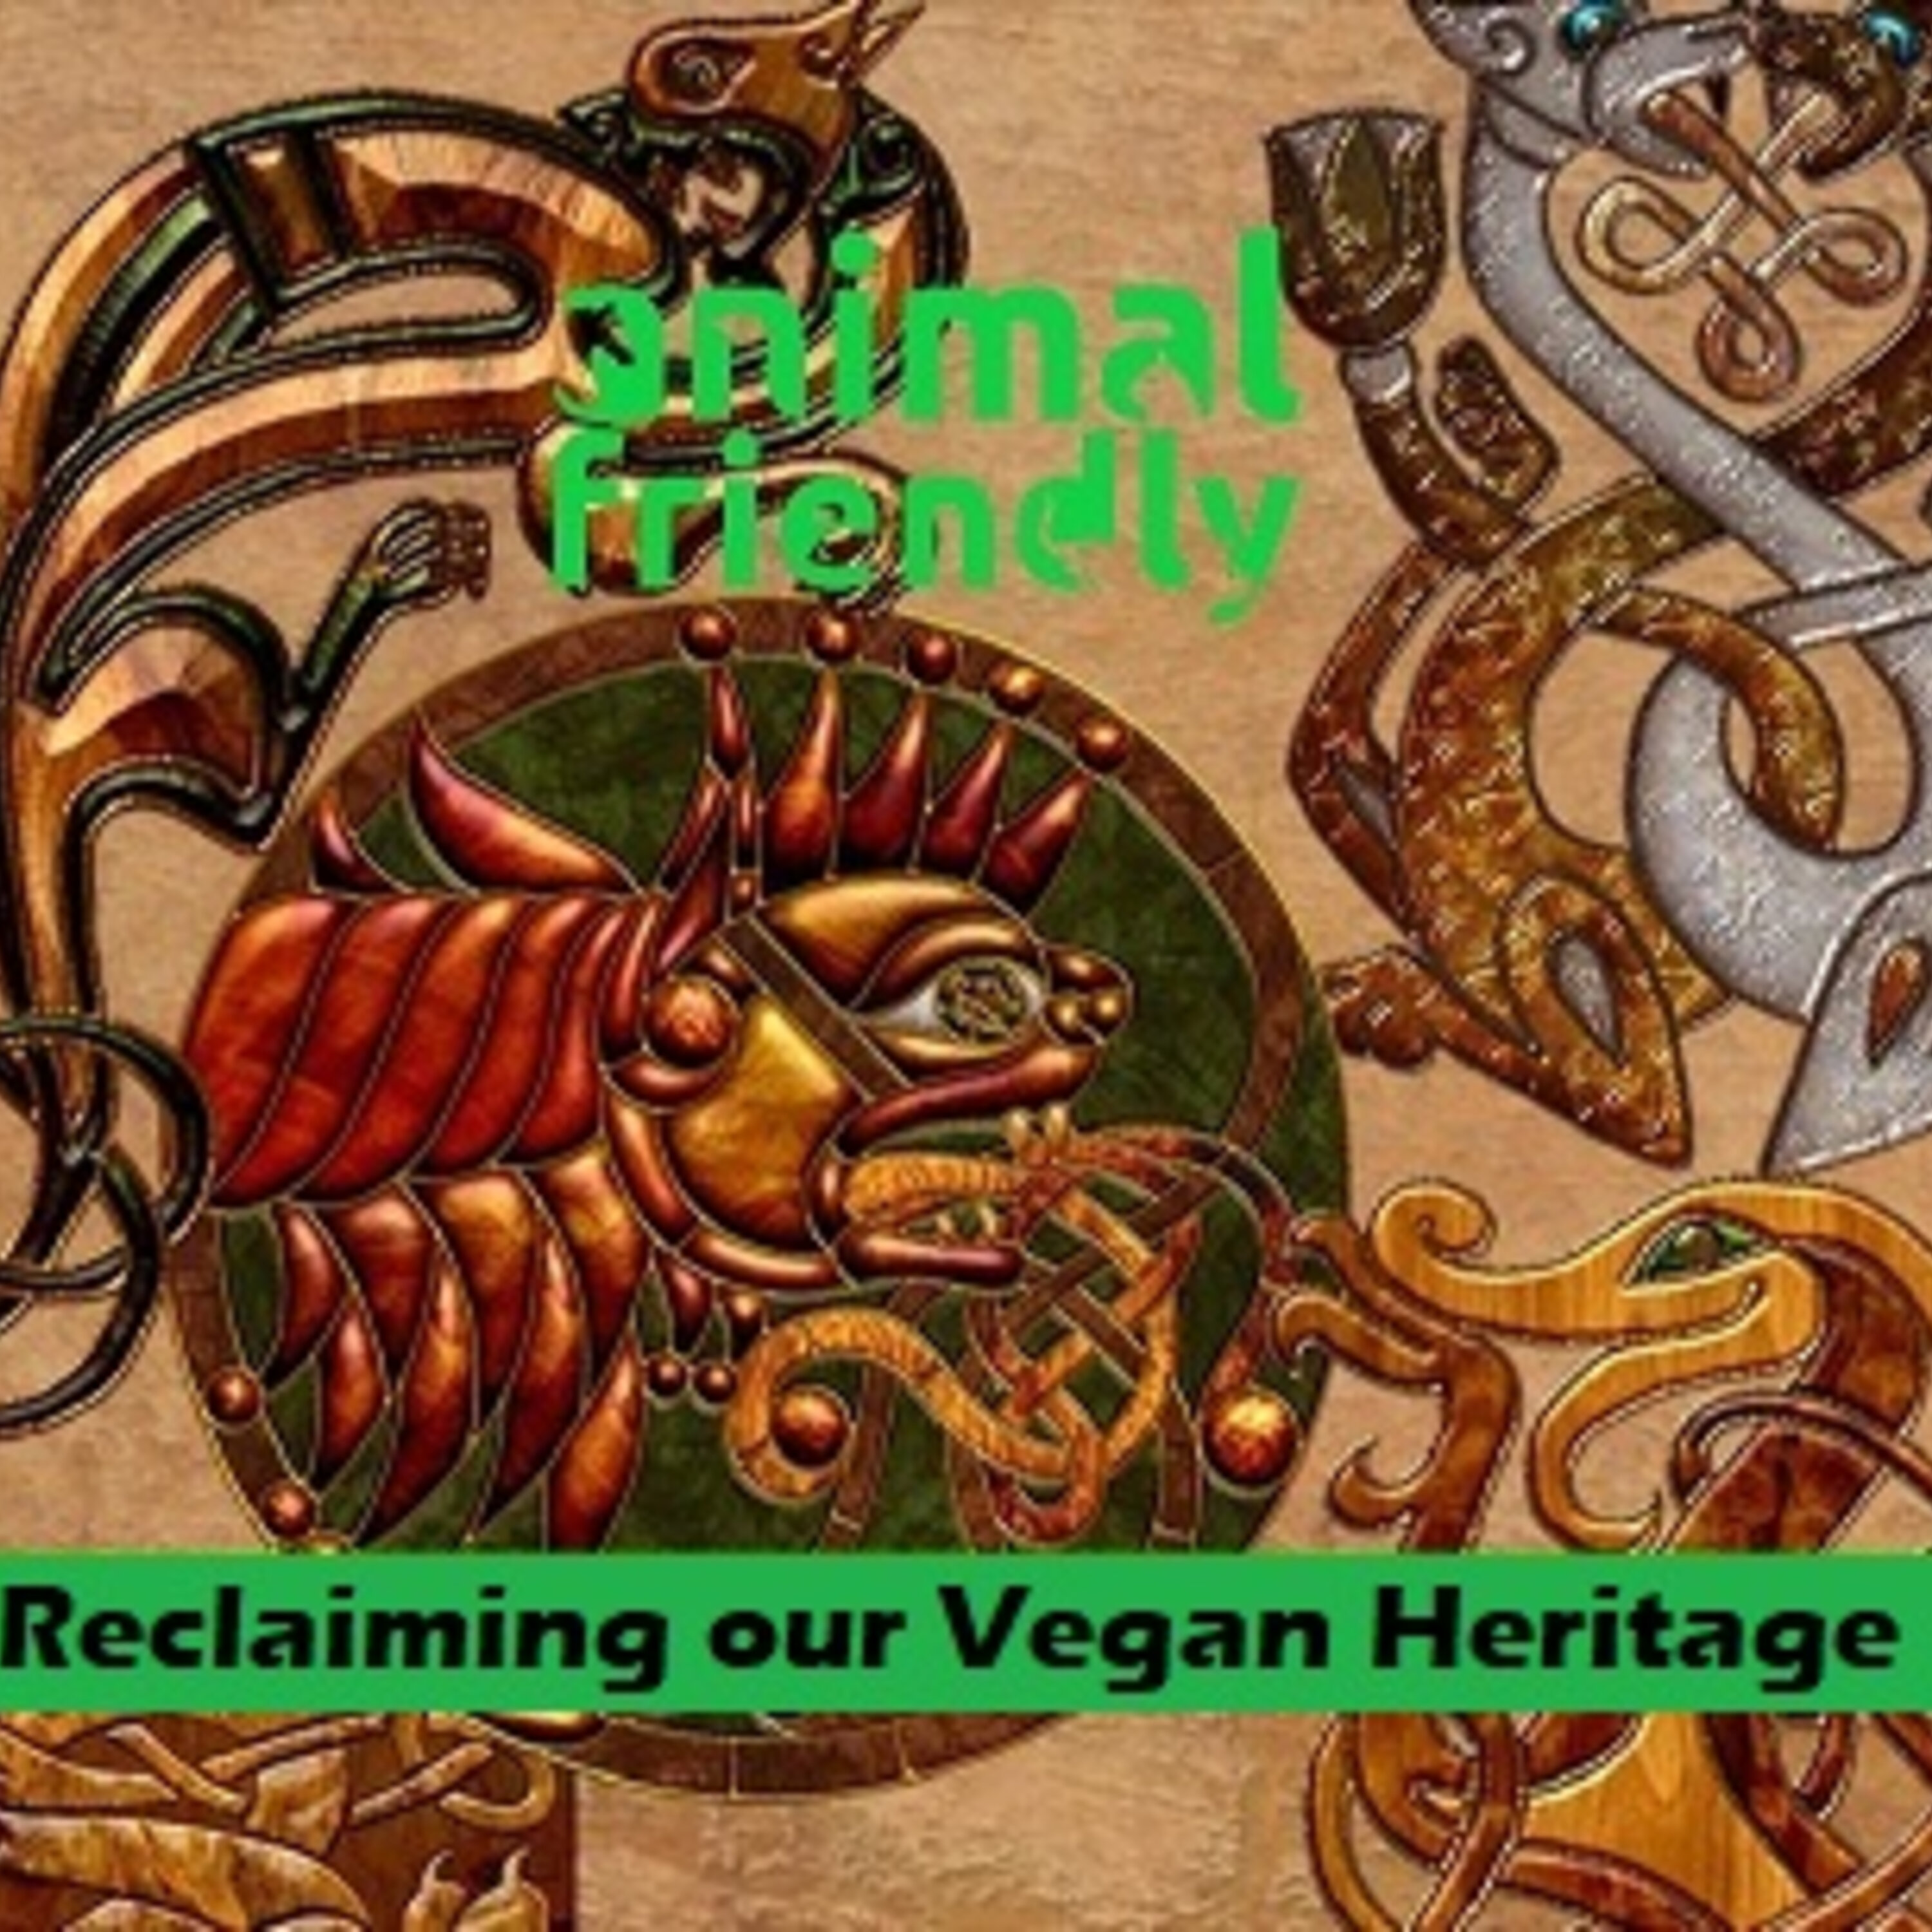 7. Reclaiming Our Vegan Heritage